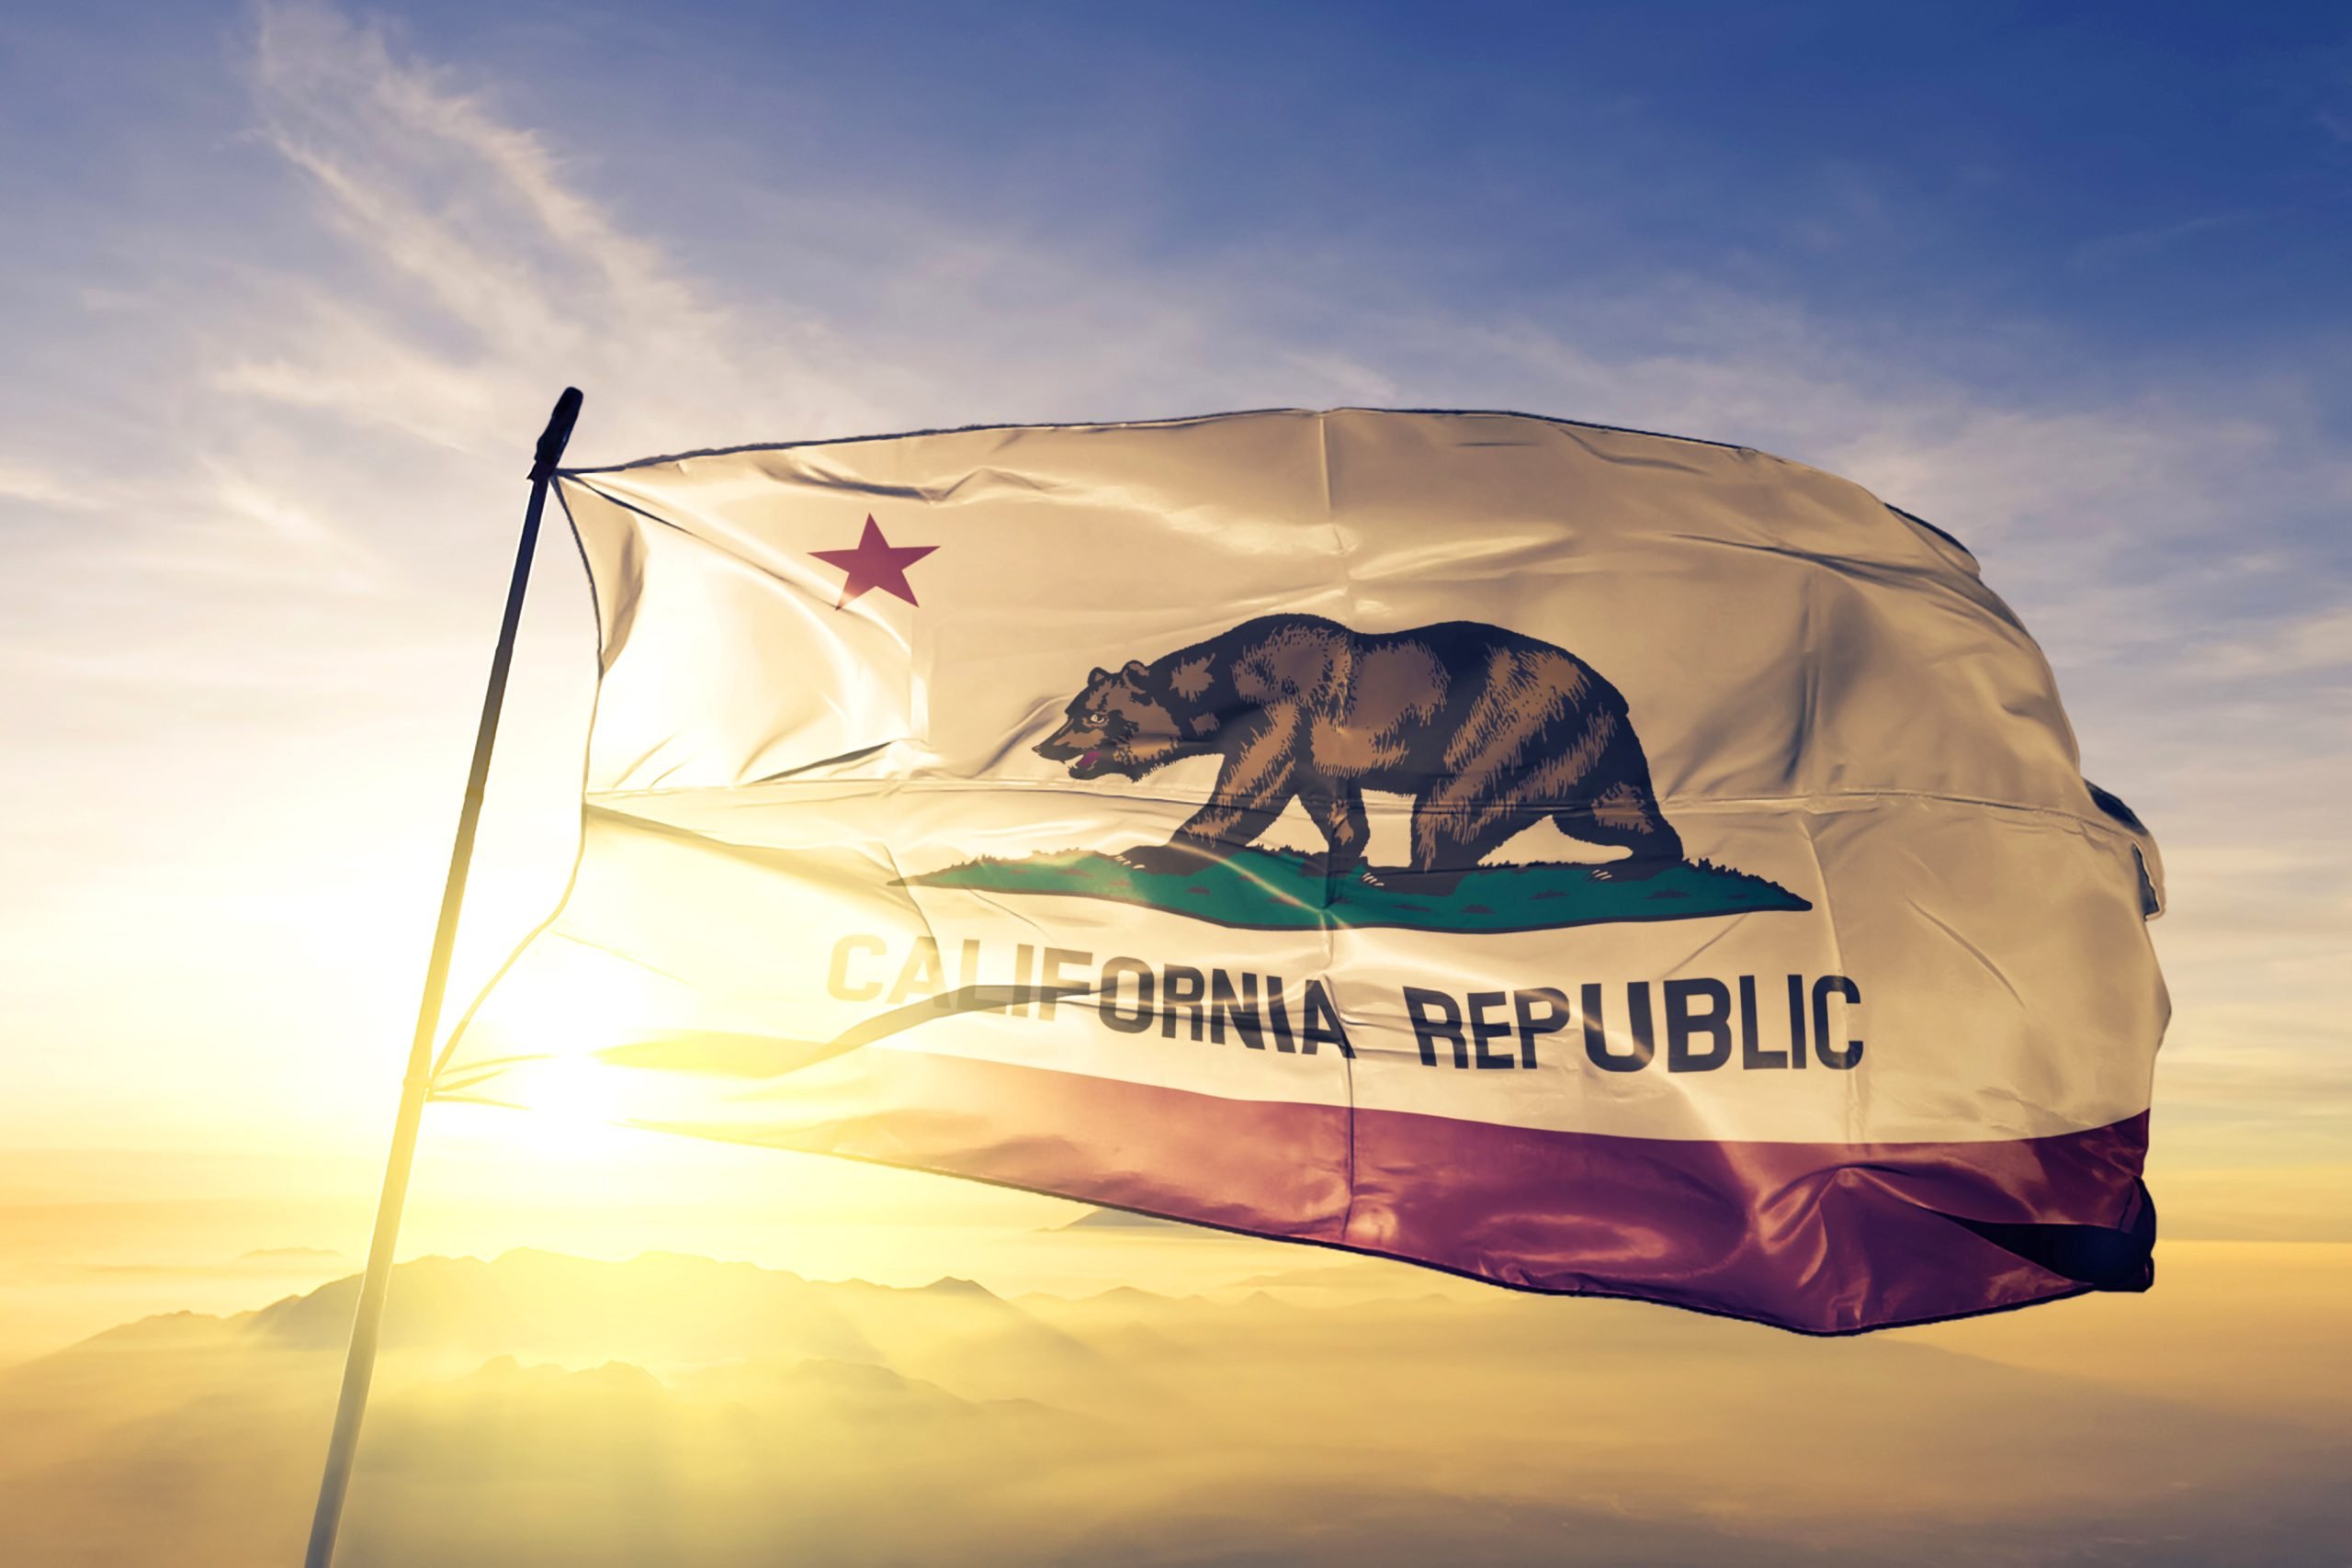 California flag